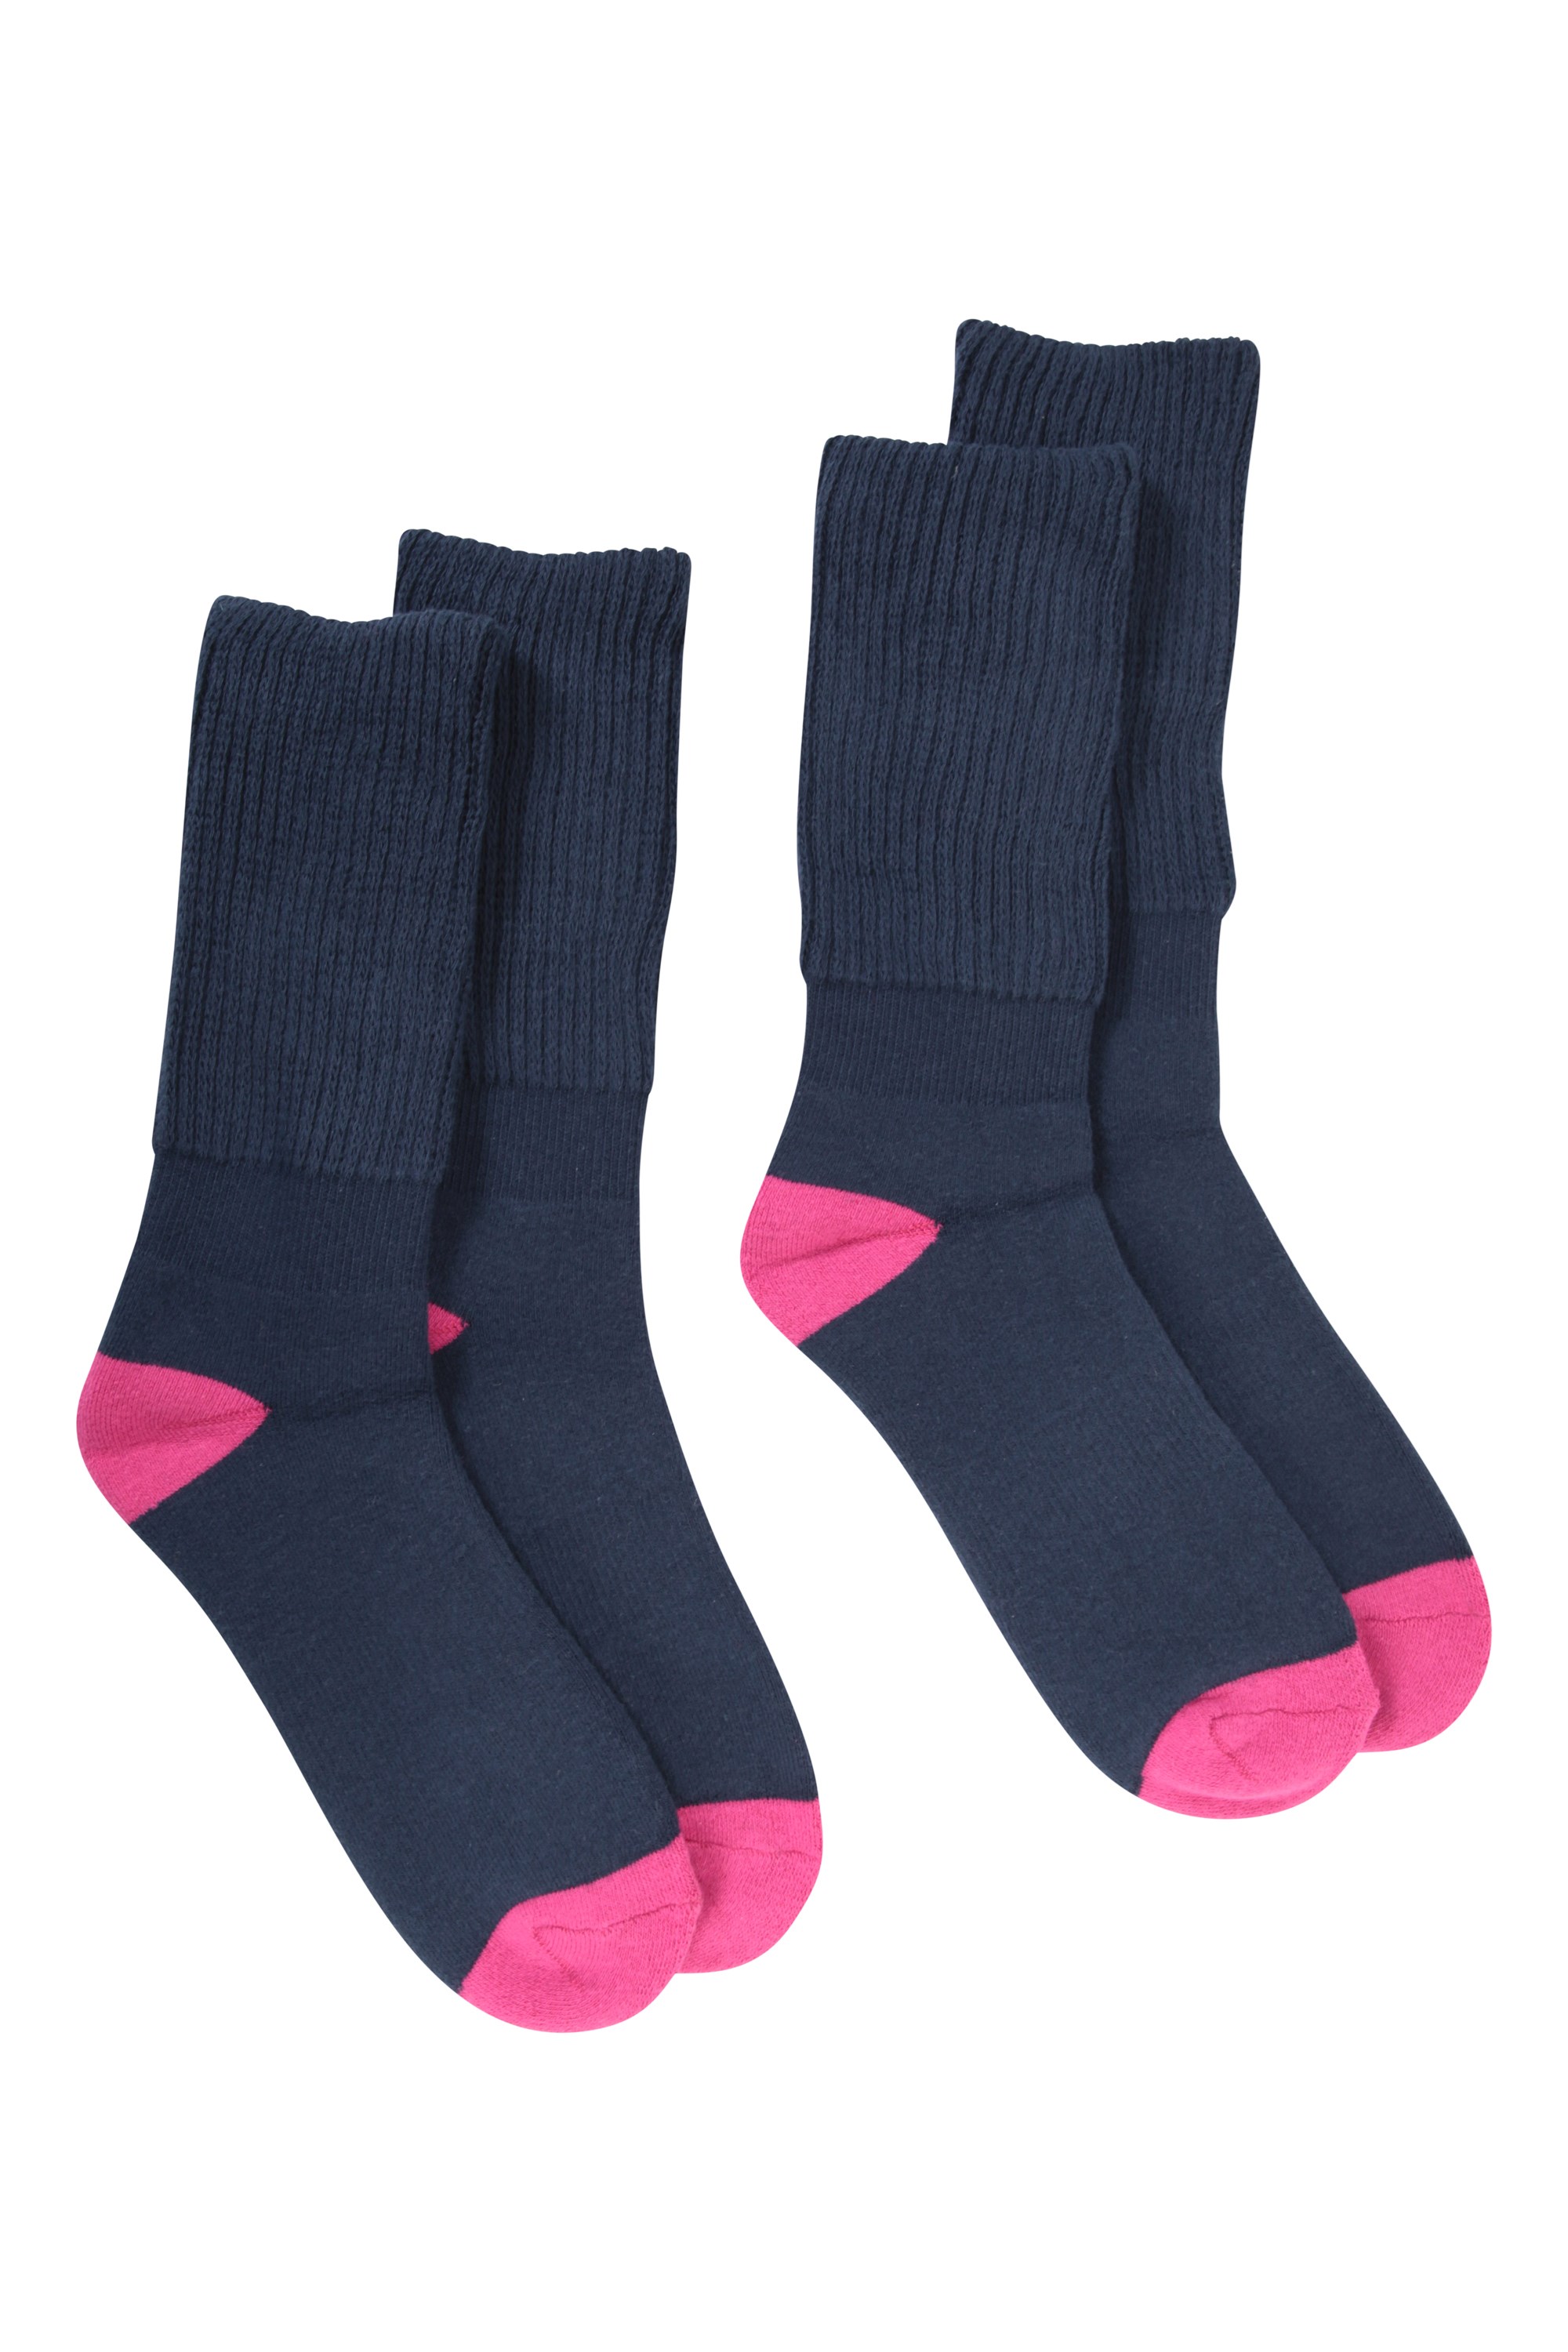 Mountain Warehouse - Womens double layer walking socks multipack - dark blue